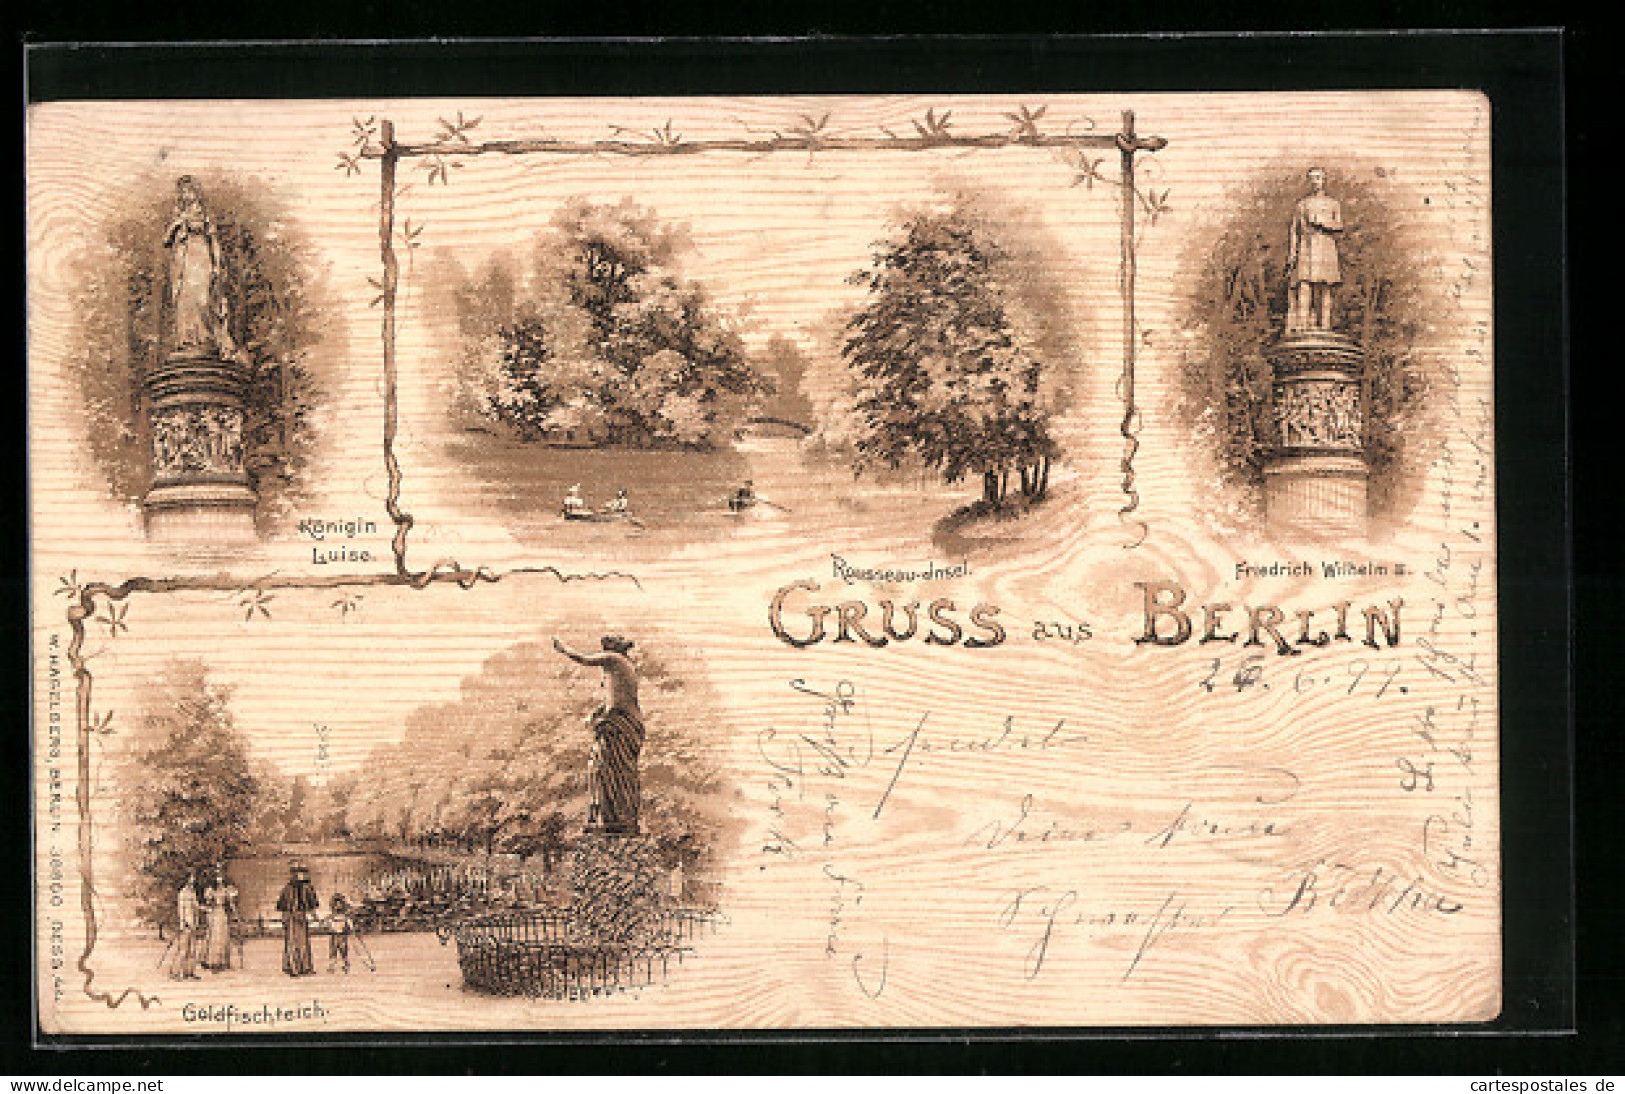 Lithographie Berlin-Tiergarten, Rousseau-Insel, Goldfischteich, Friedrich Wilhelm III.  - Tiergarten